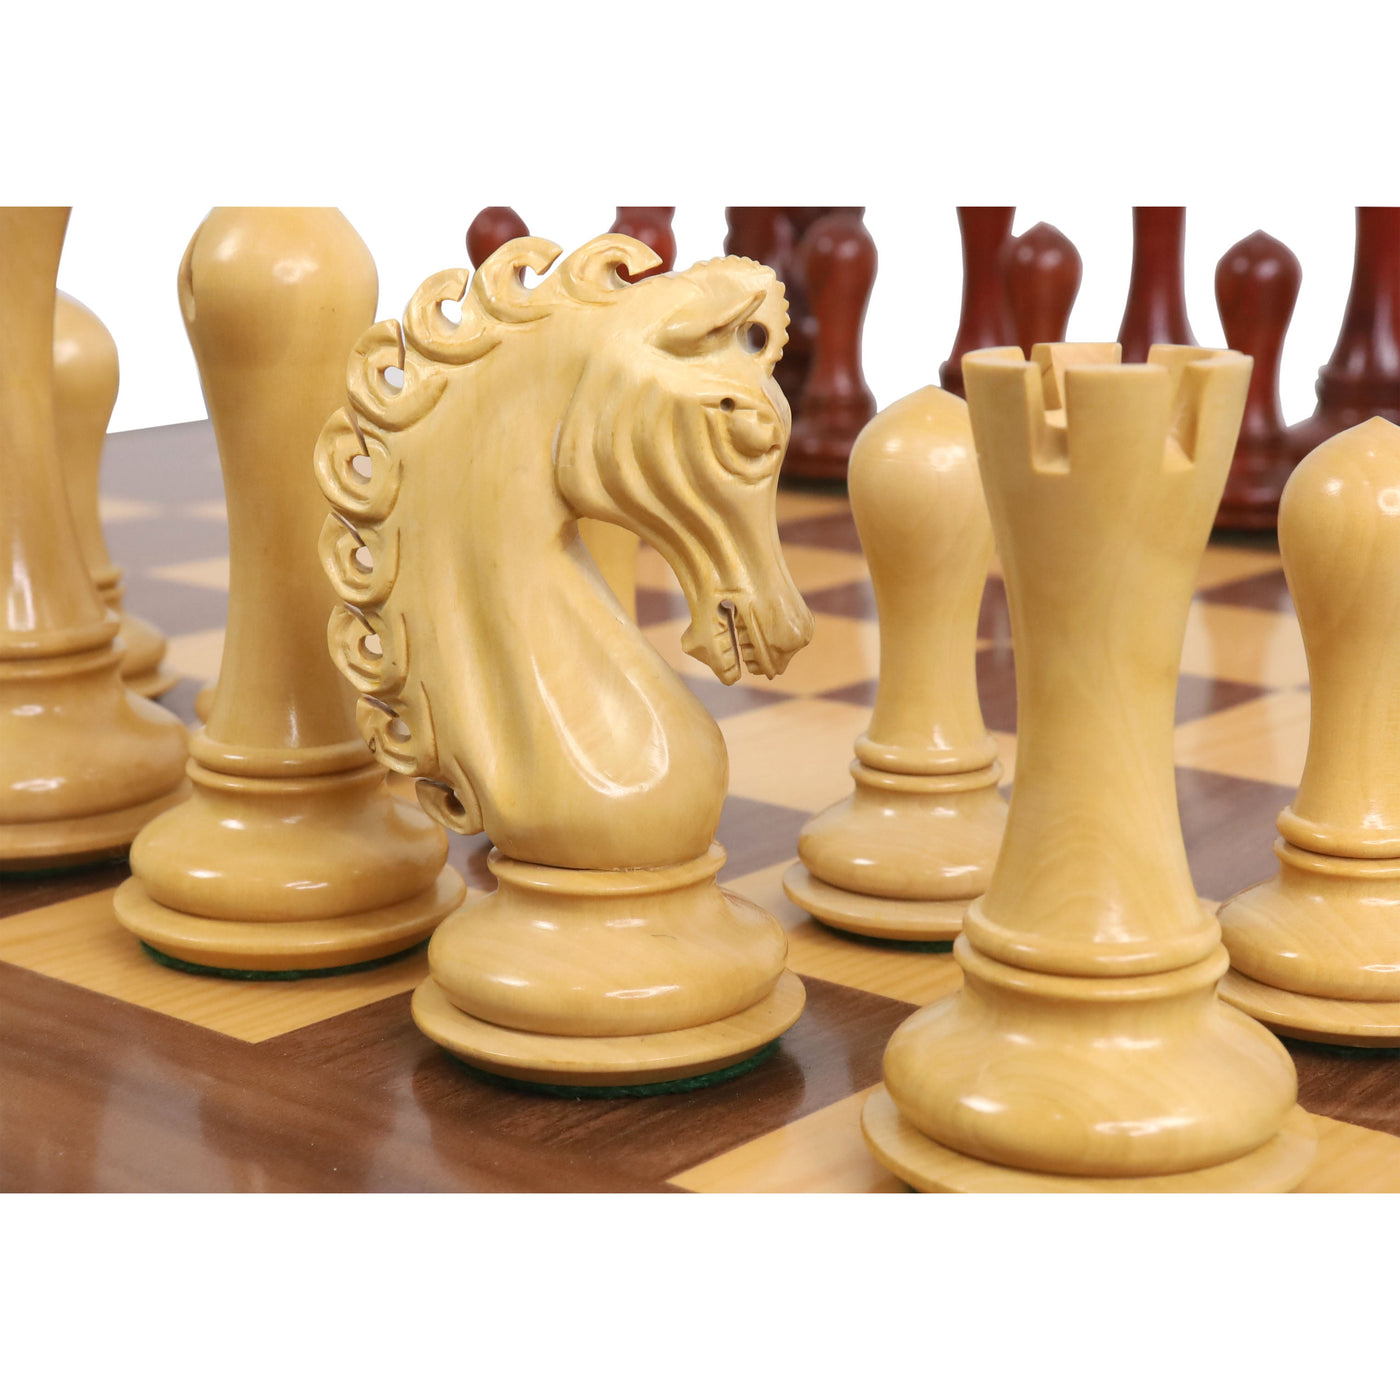 4.6" Avant Garde Luxury Staunton Chess Set - Chess Pieces Only - Bud Rosewood & Boxwood